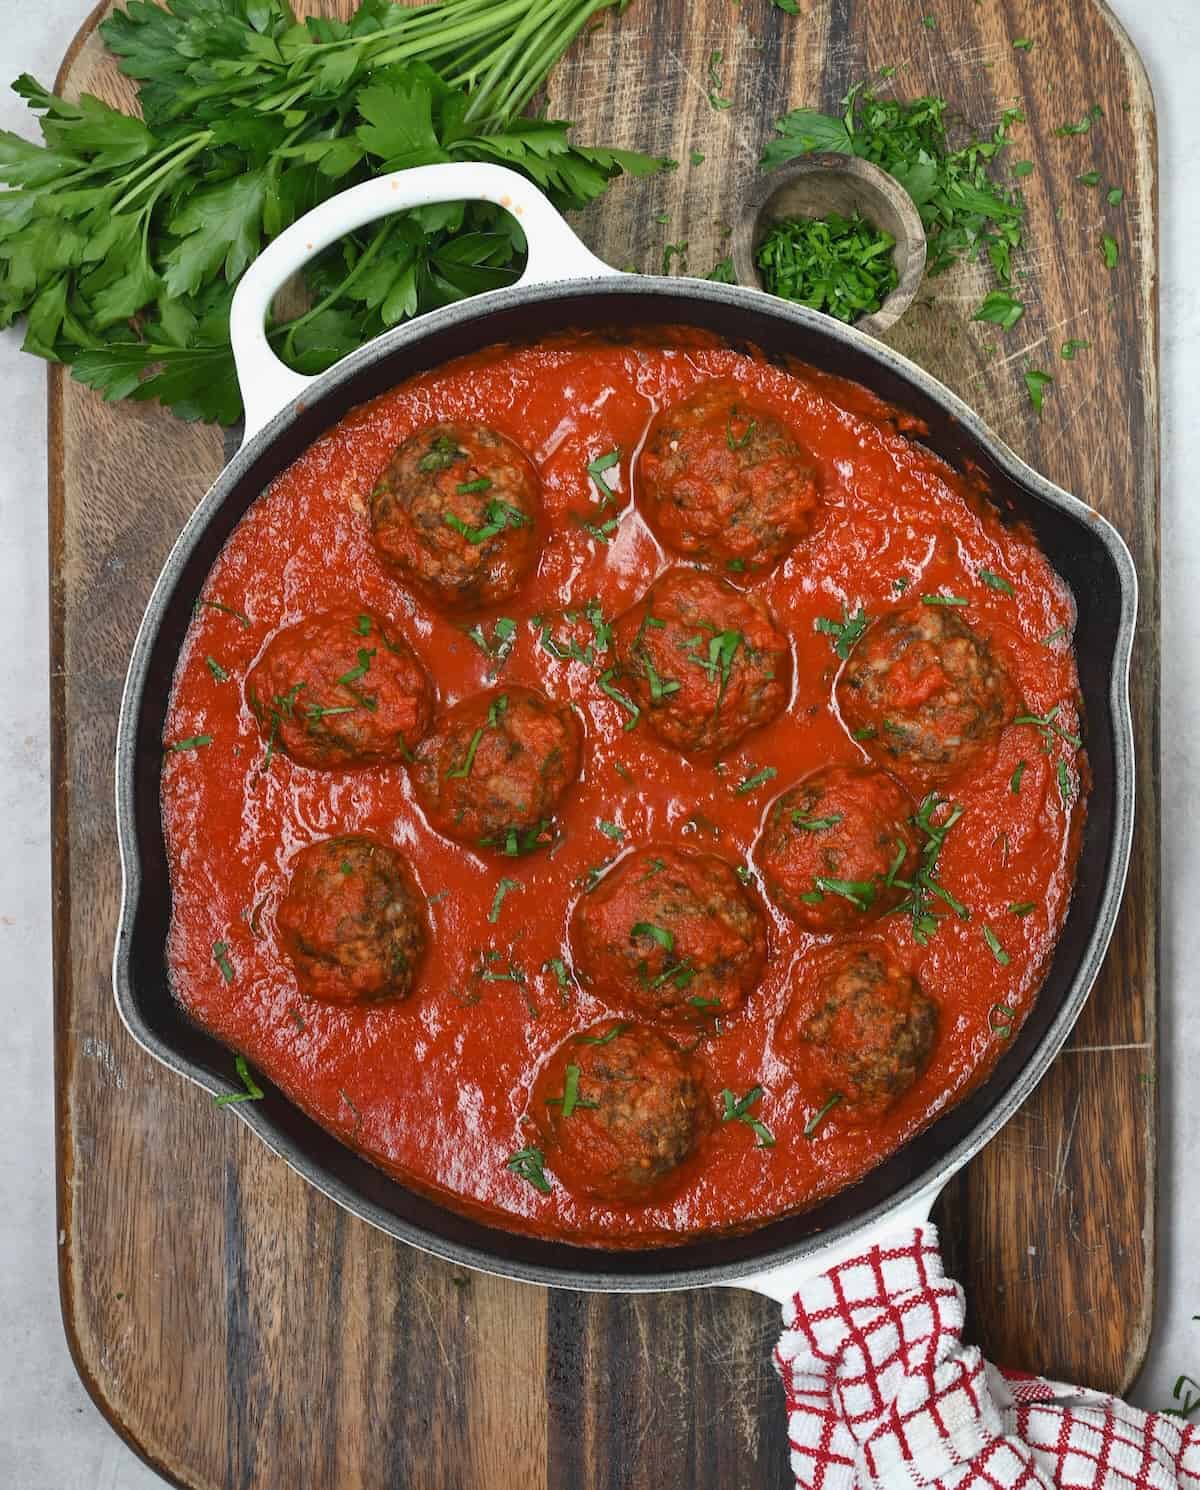 Italian meatballs with marinara sauce in a skillet